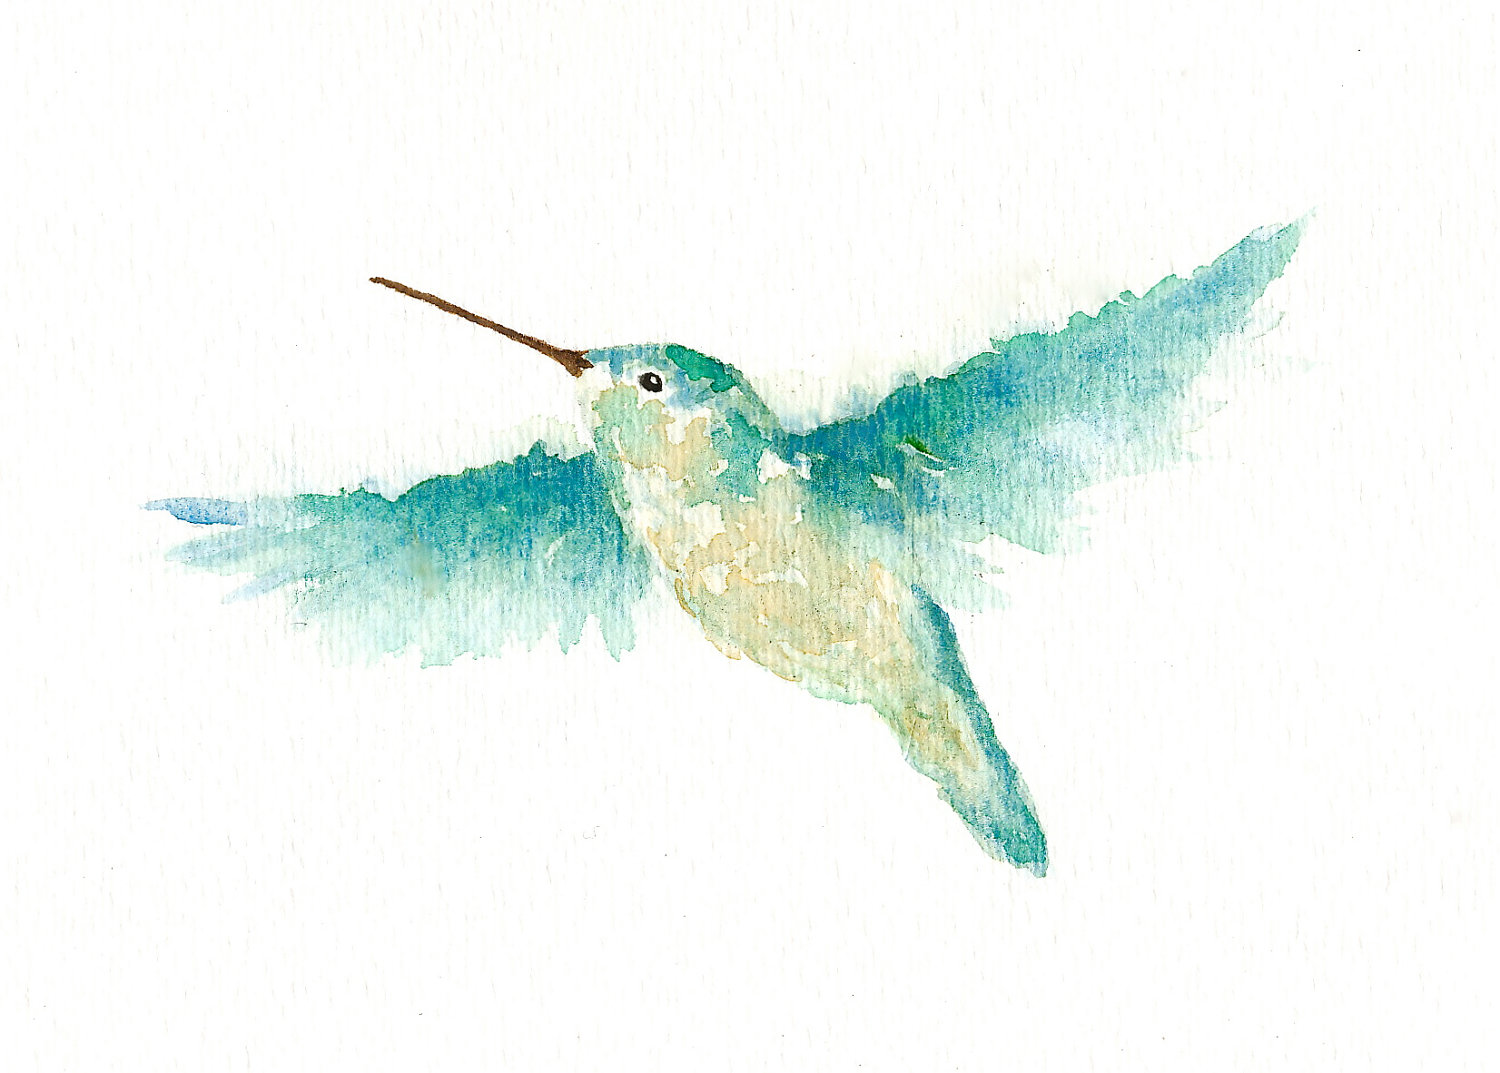 Watercolor Hummingbird Images Wallpapers